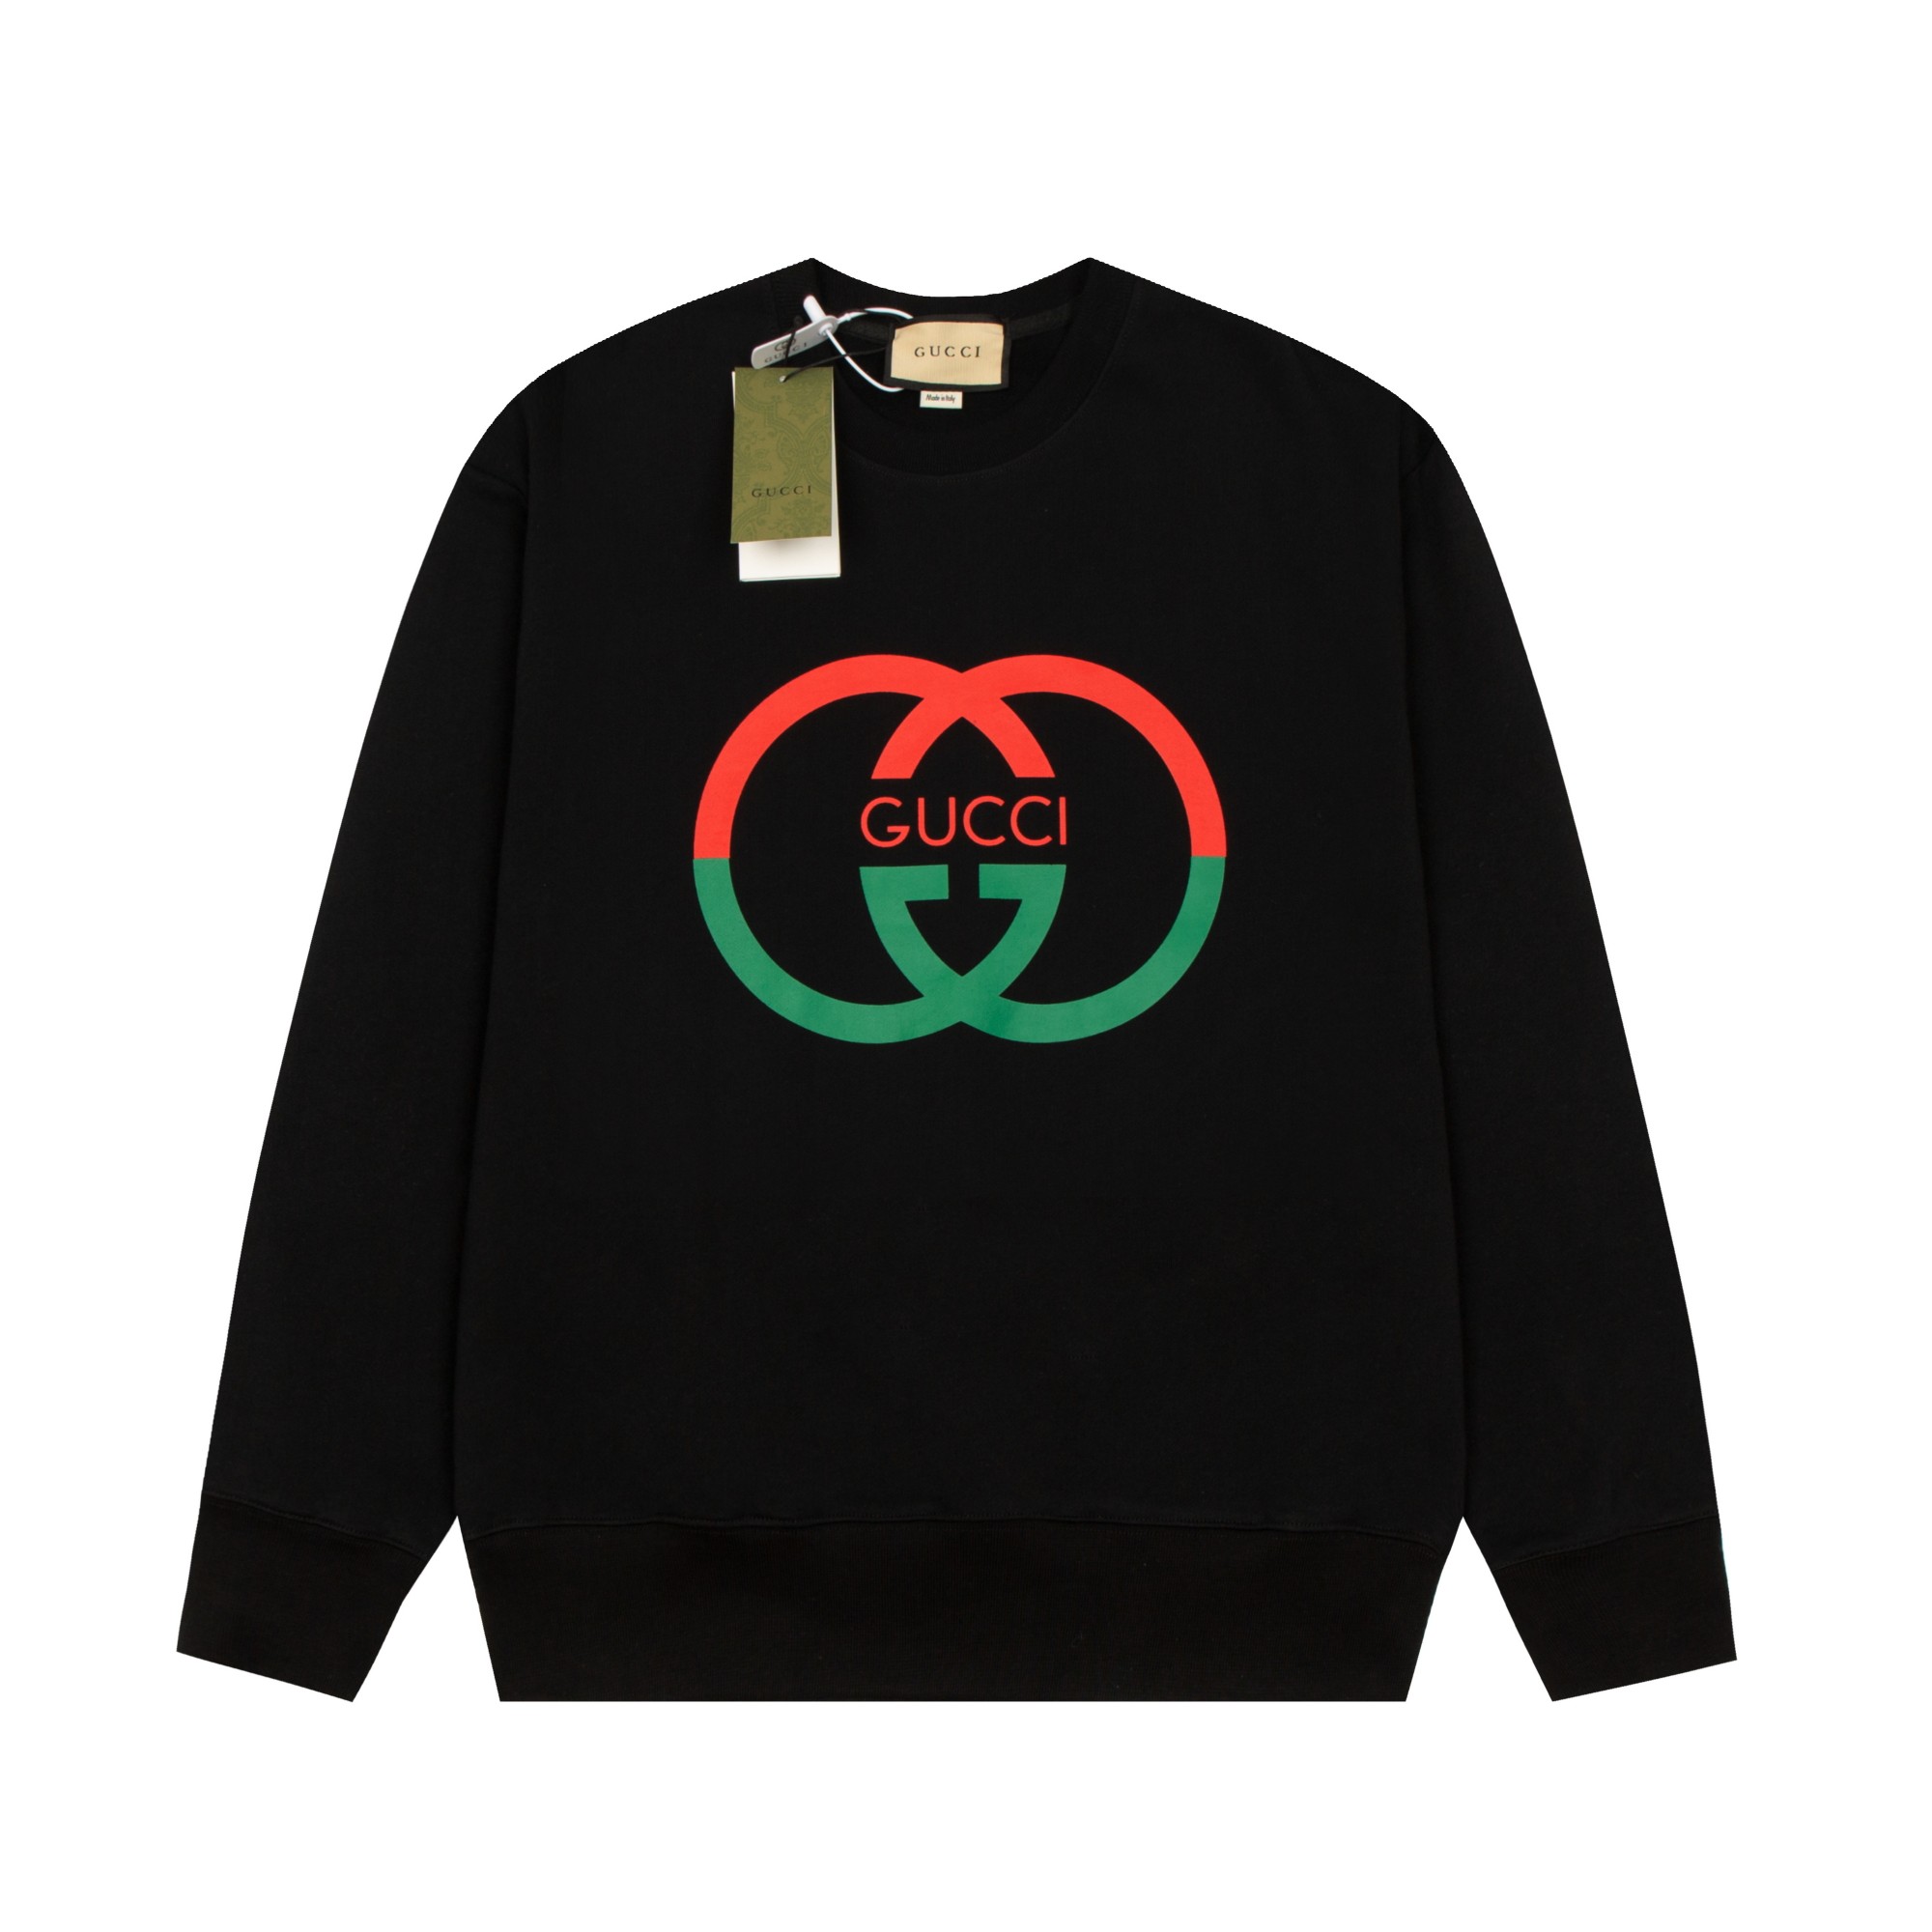 Gucci’s latest double G logo crew neck sweatshirt